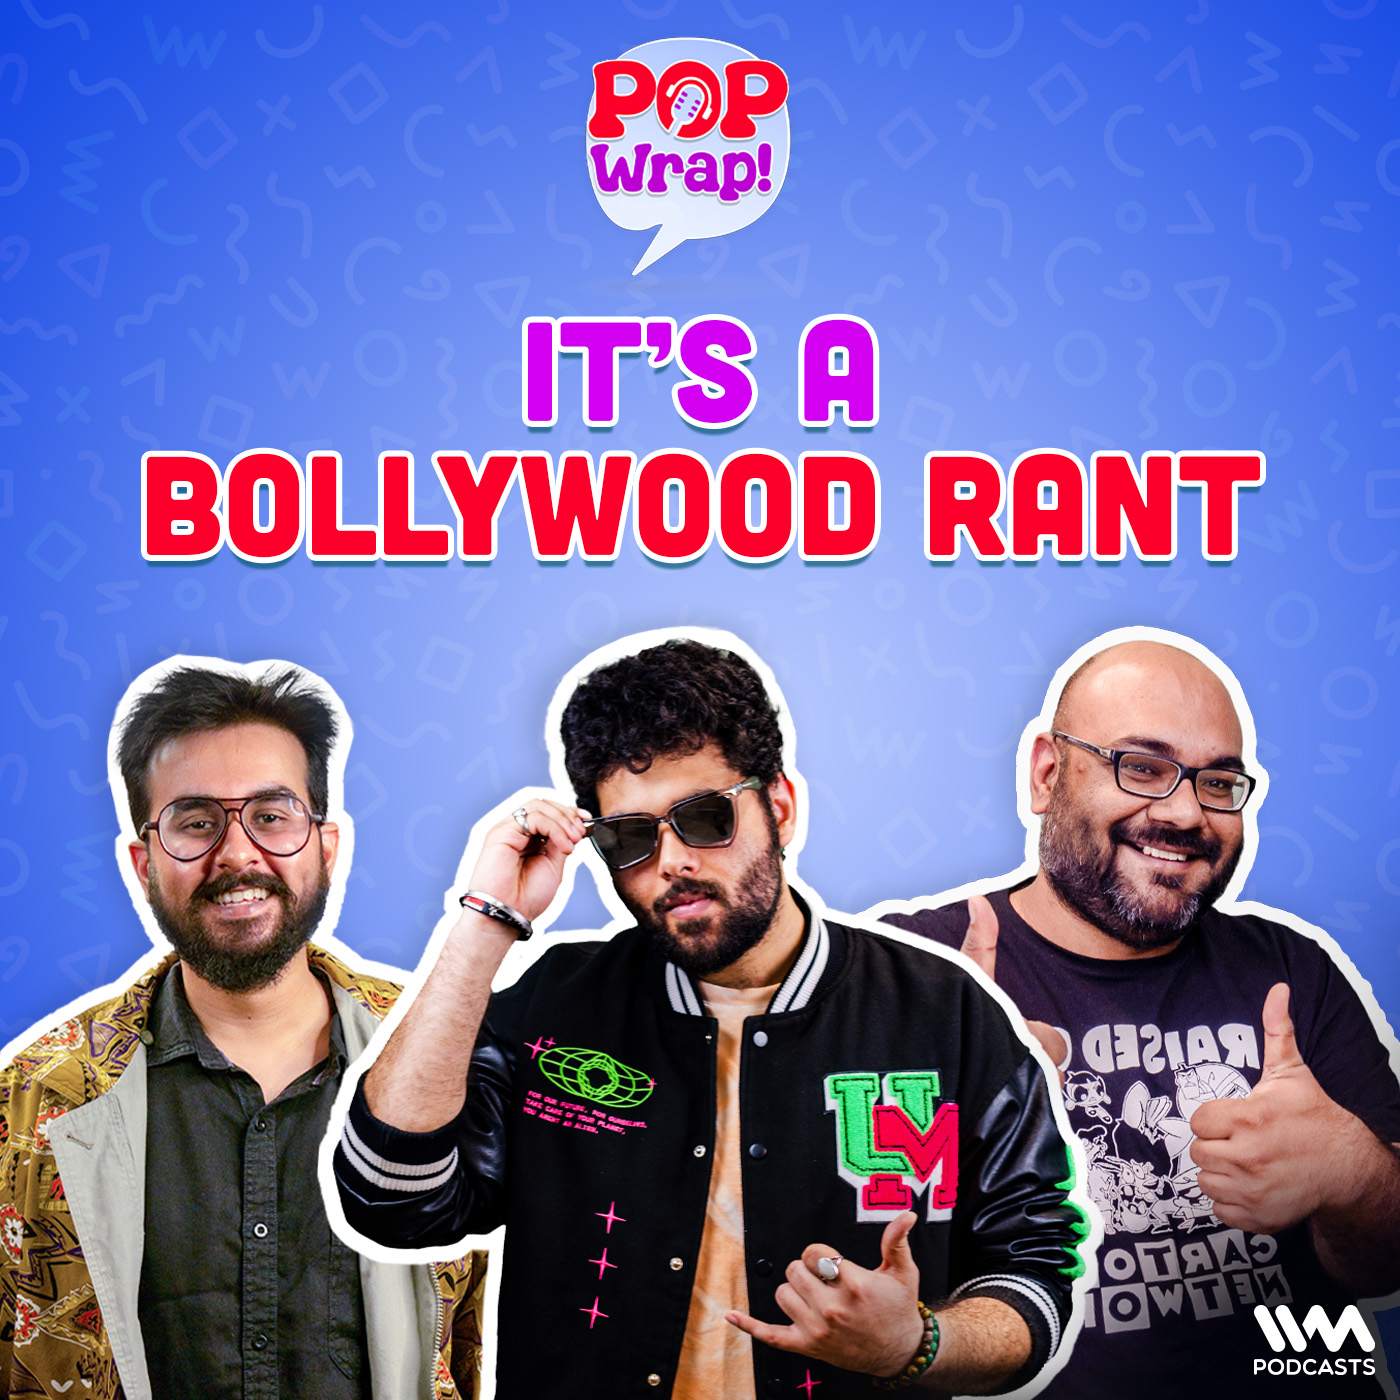 It’s A Bollywood Rant | Pop wrap!